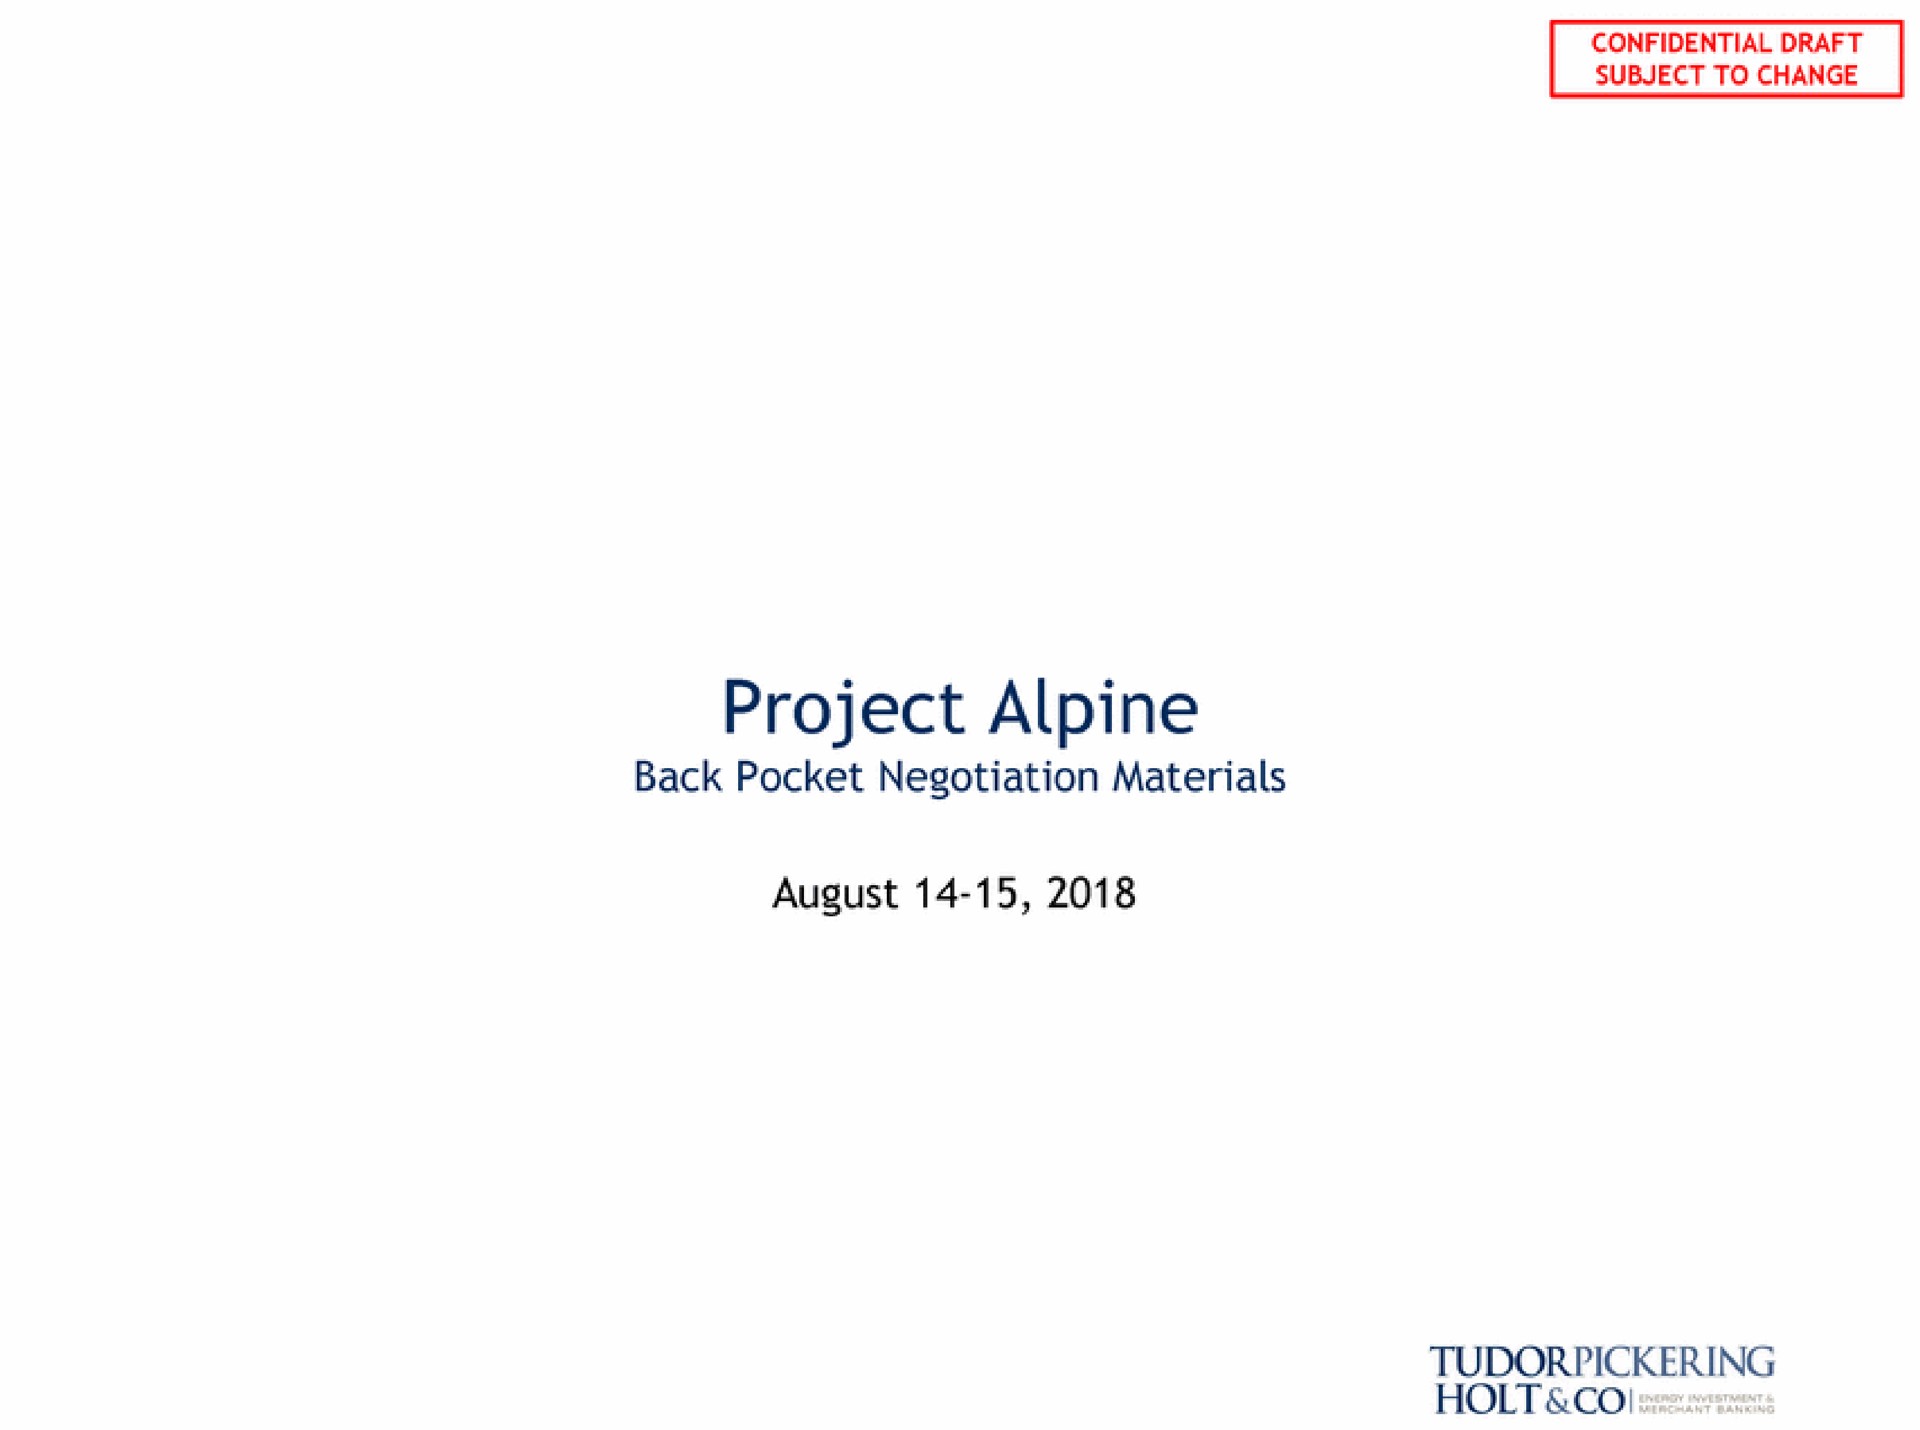 project alpine back pocket negotiation materials august | Tudor, Pickering, Holt & Co